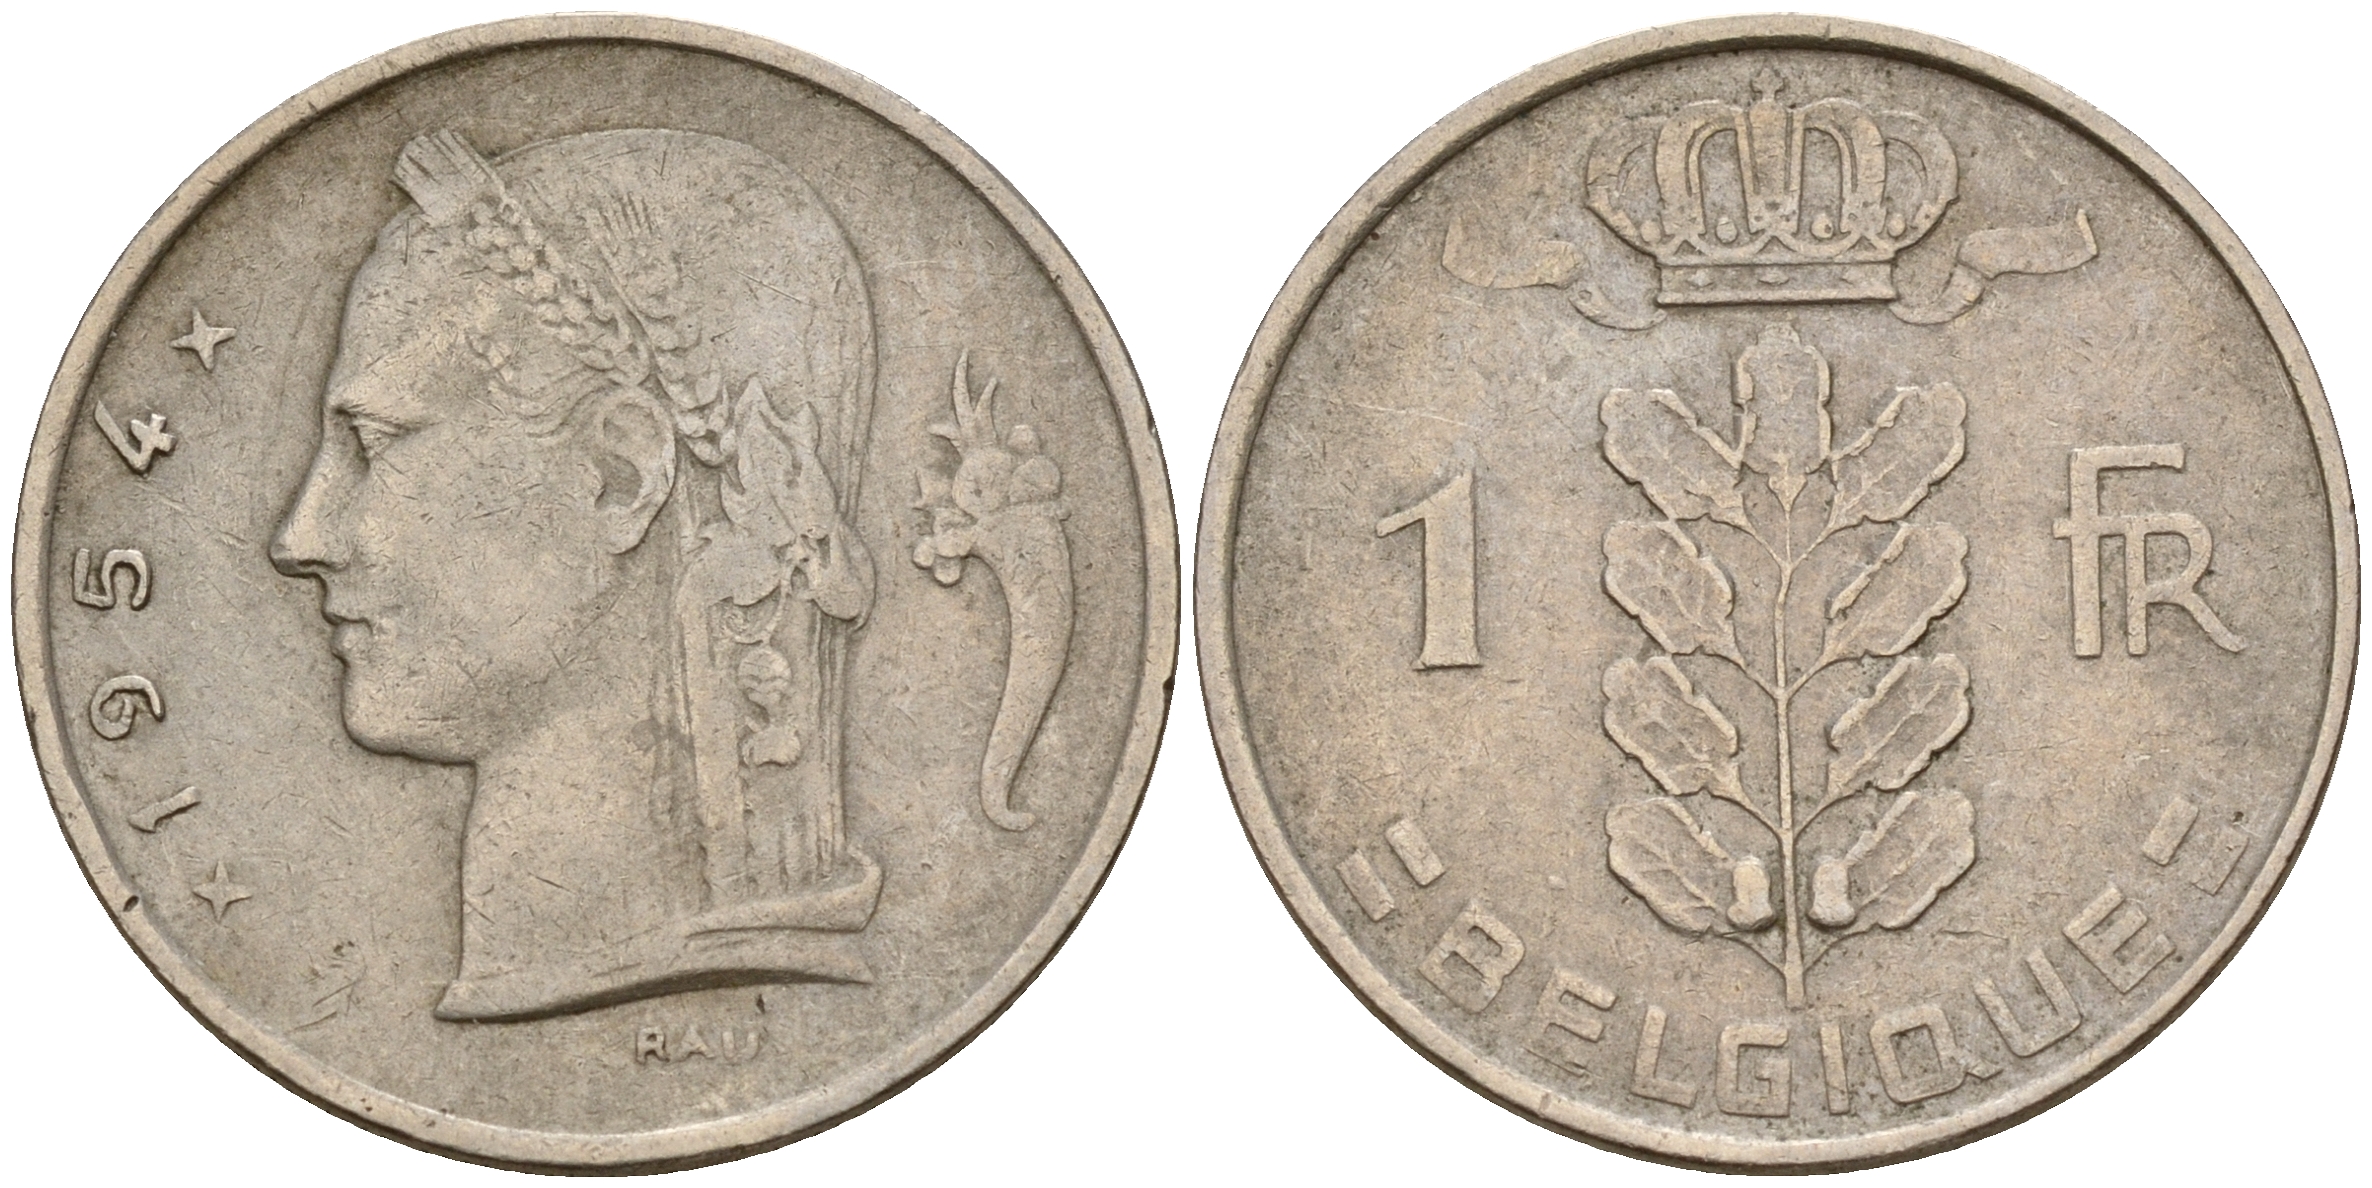 Бельгия б 1. Золотая монета 40 лет. 1 Оне пени 2005г монета.